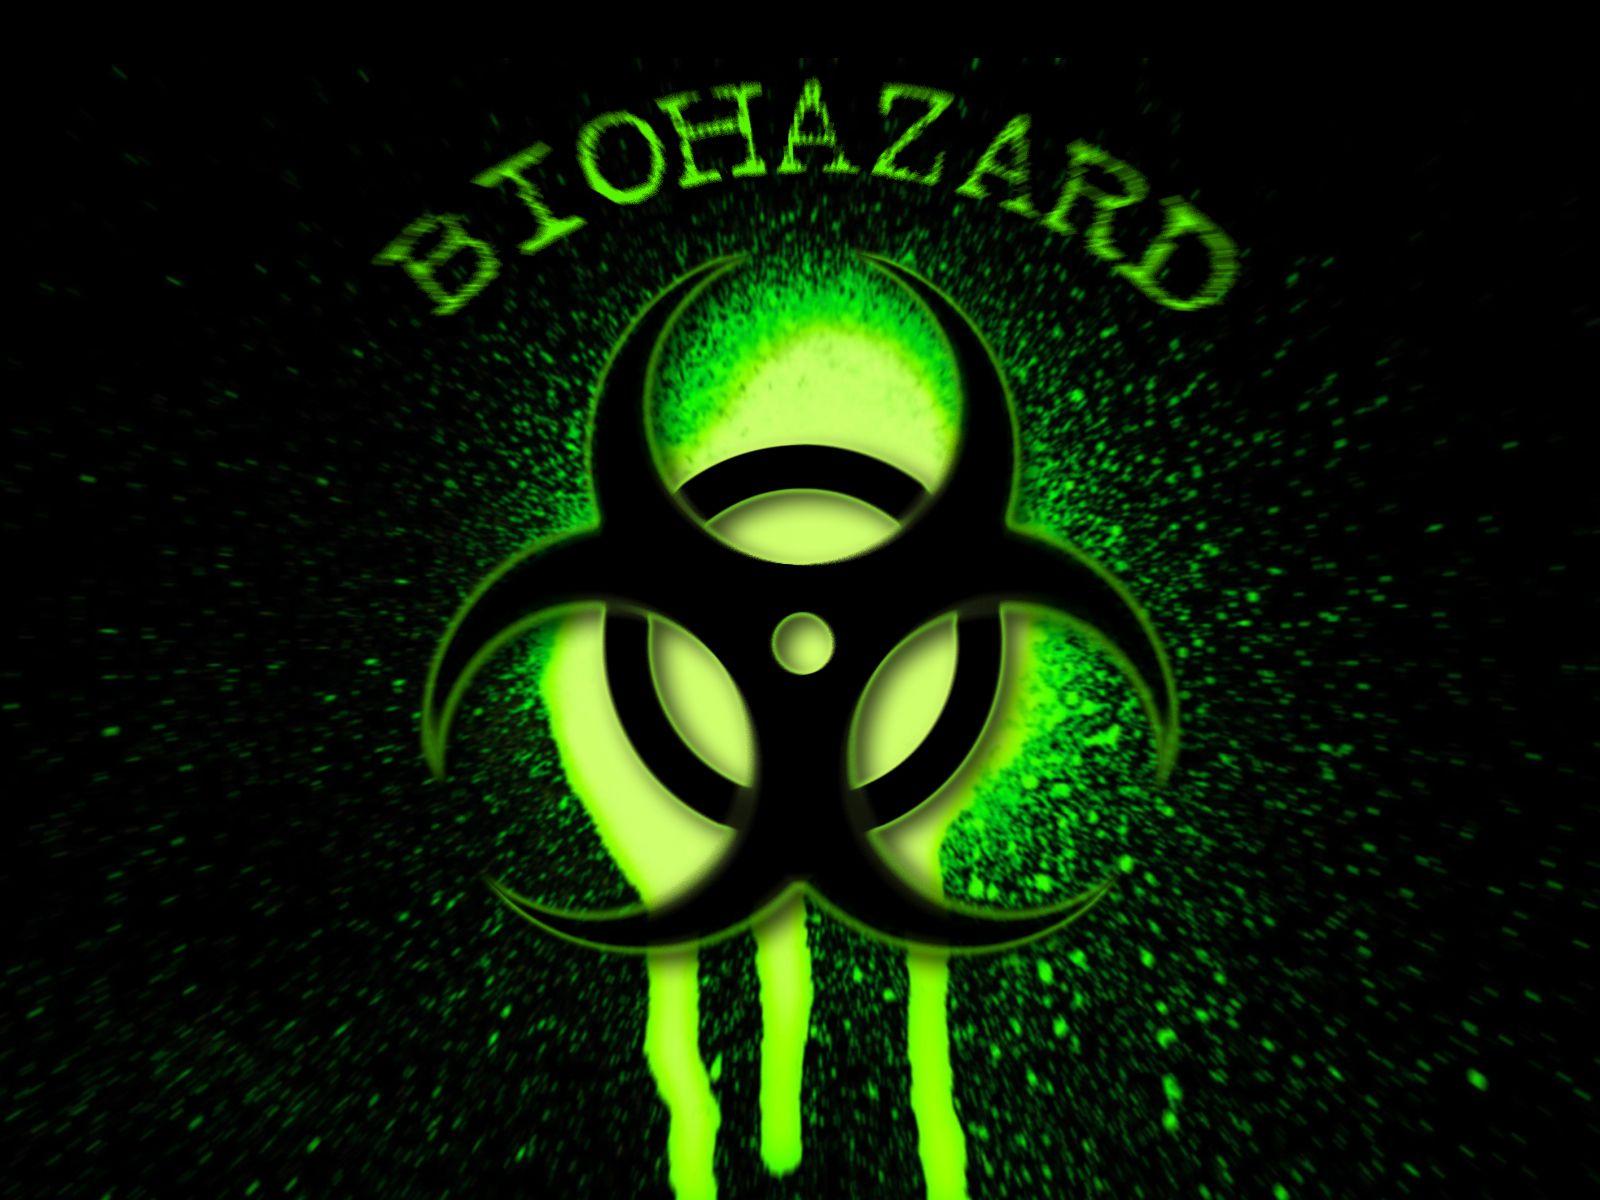 biohazard logo. Biohazard tattoo, Hazard symbol, Graffiti